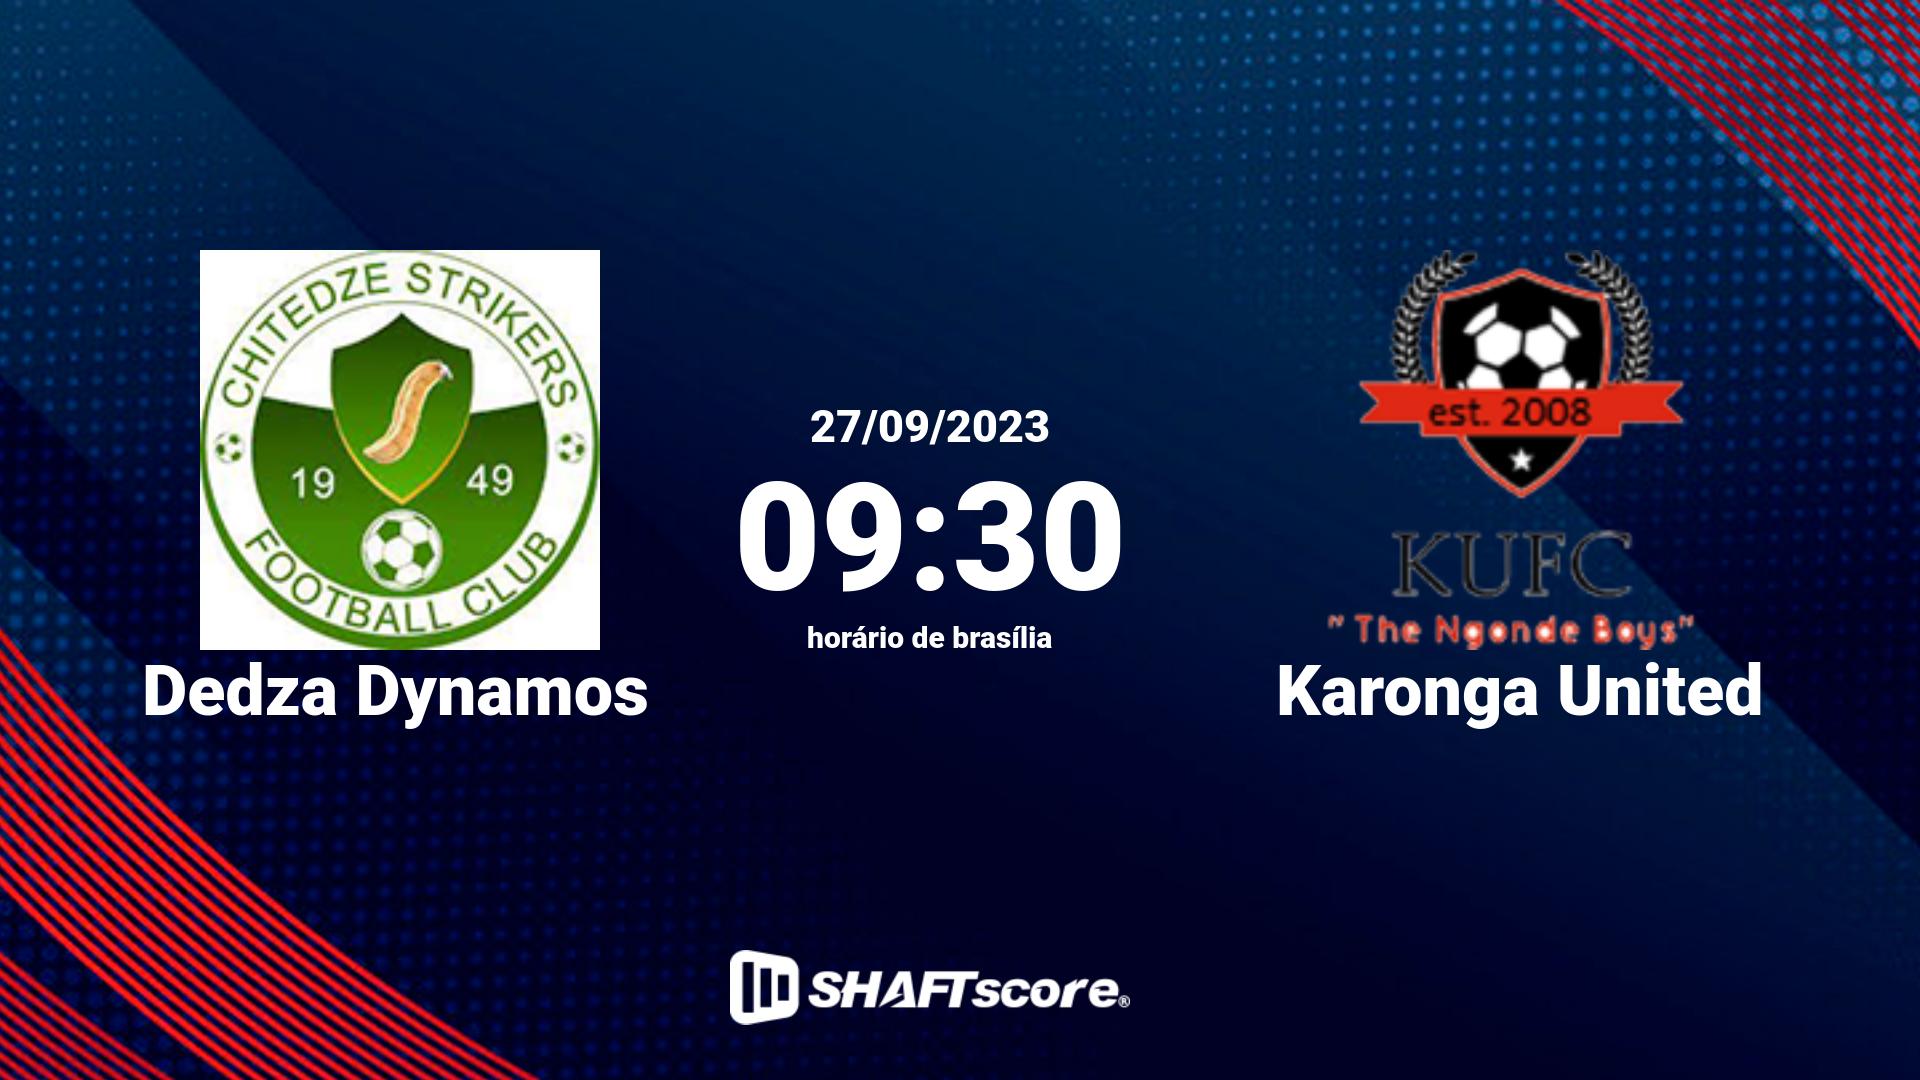 Estatísticas do jogo Dedza Dynamos vs Karonga United 27.09 09:30